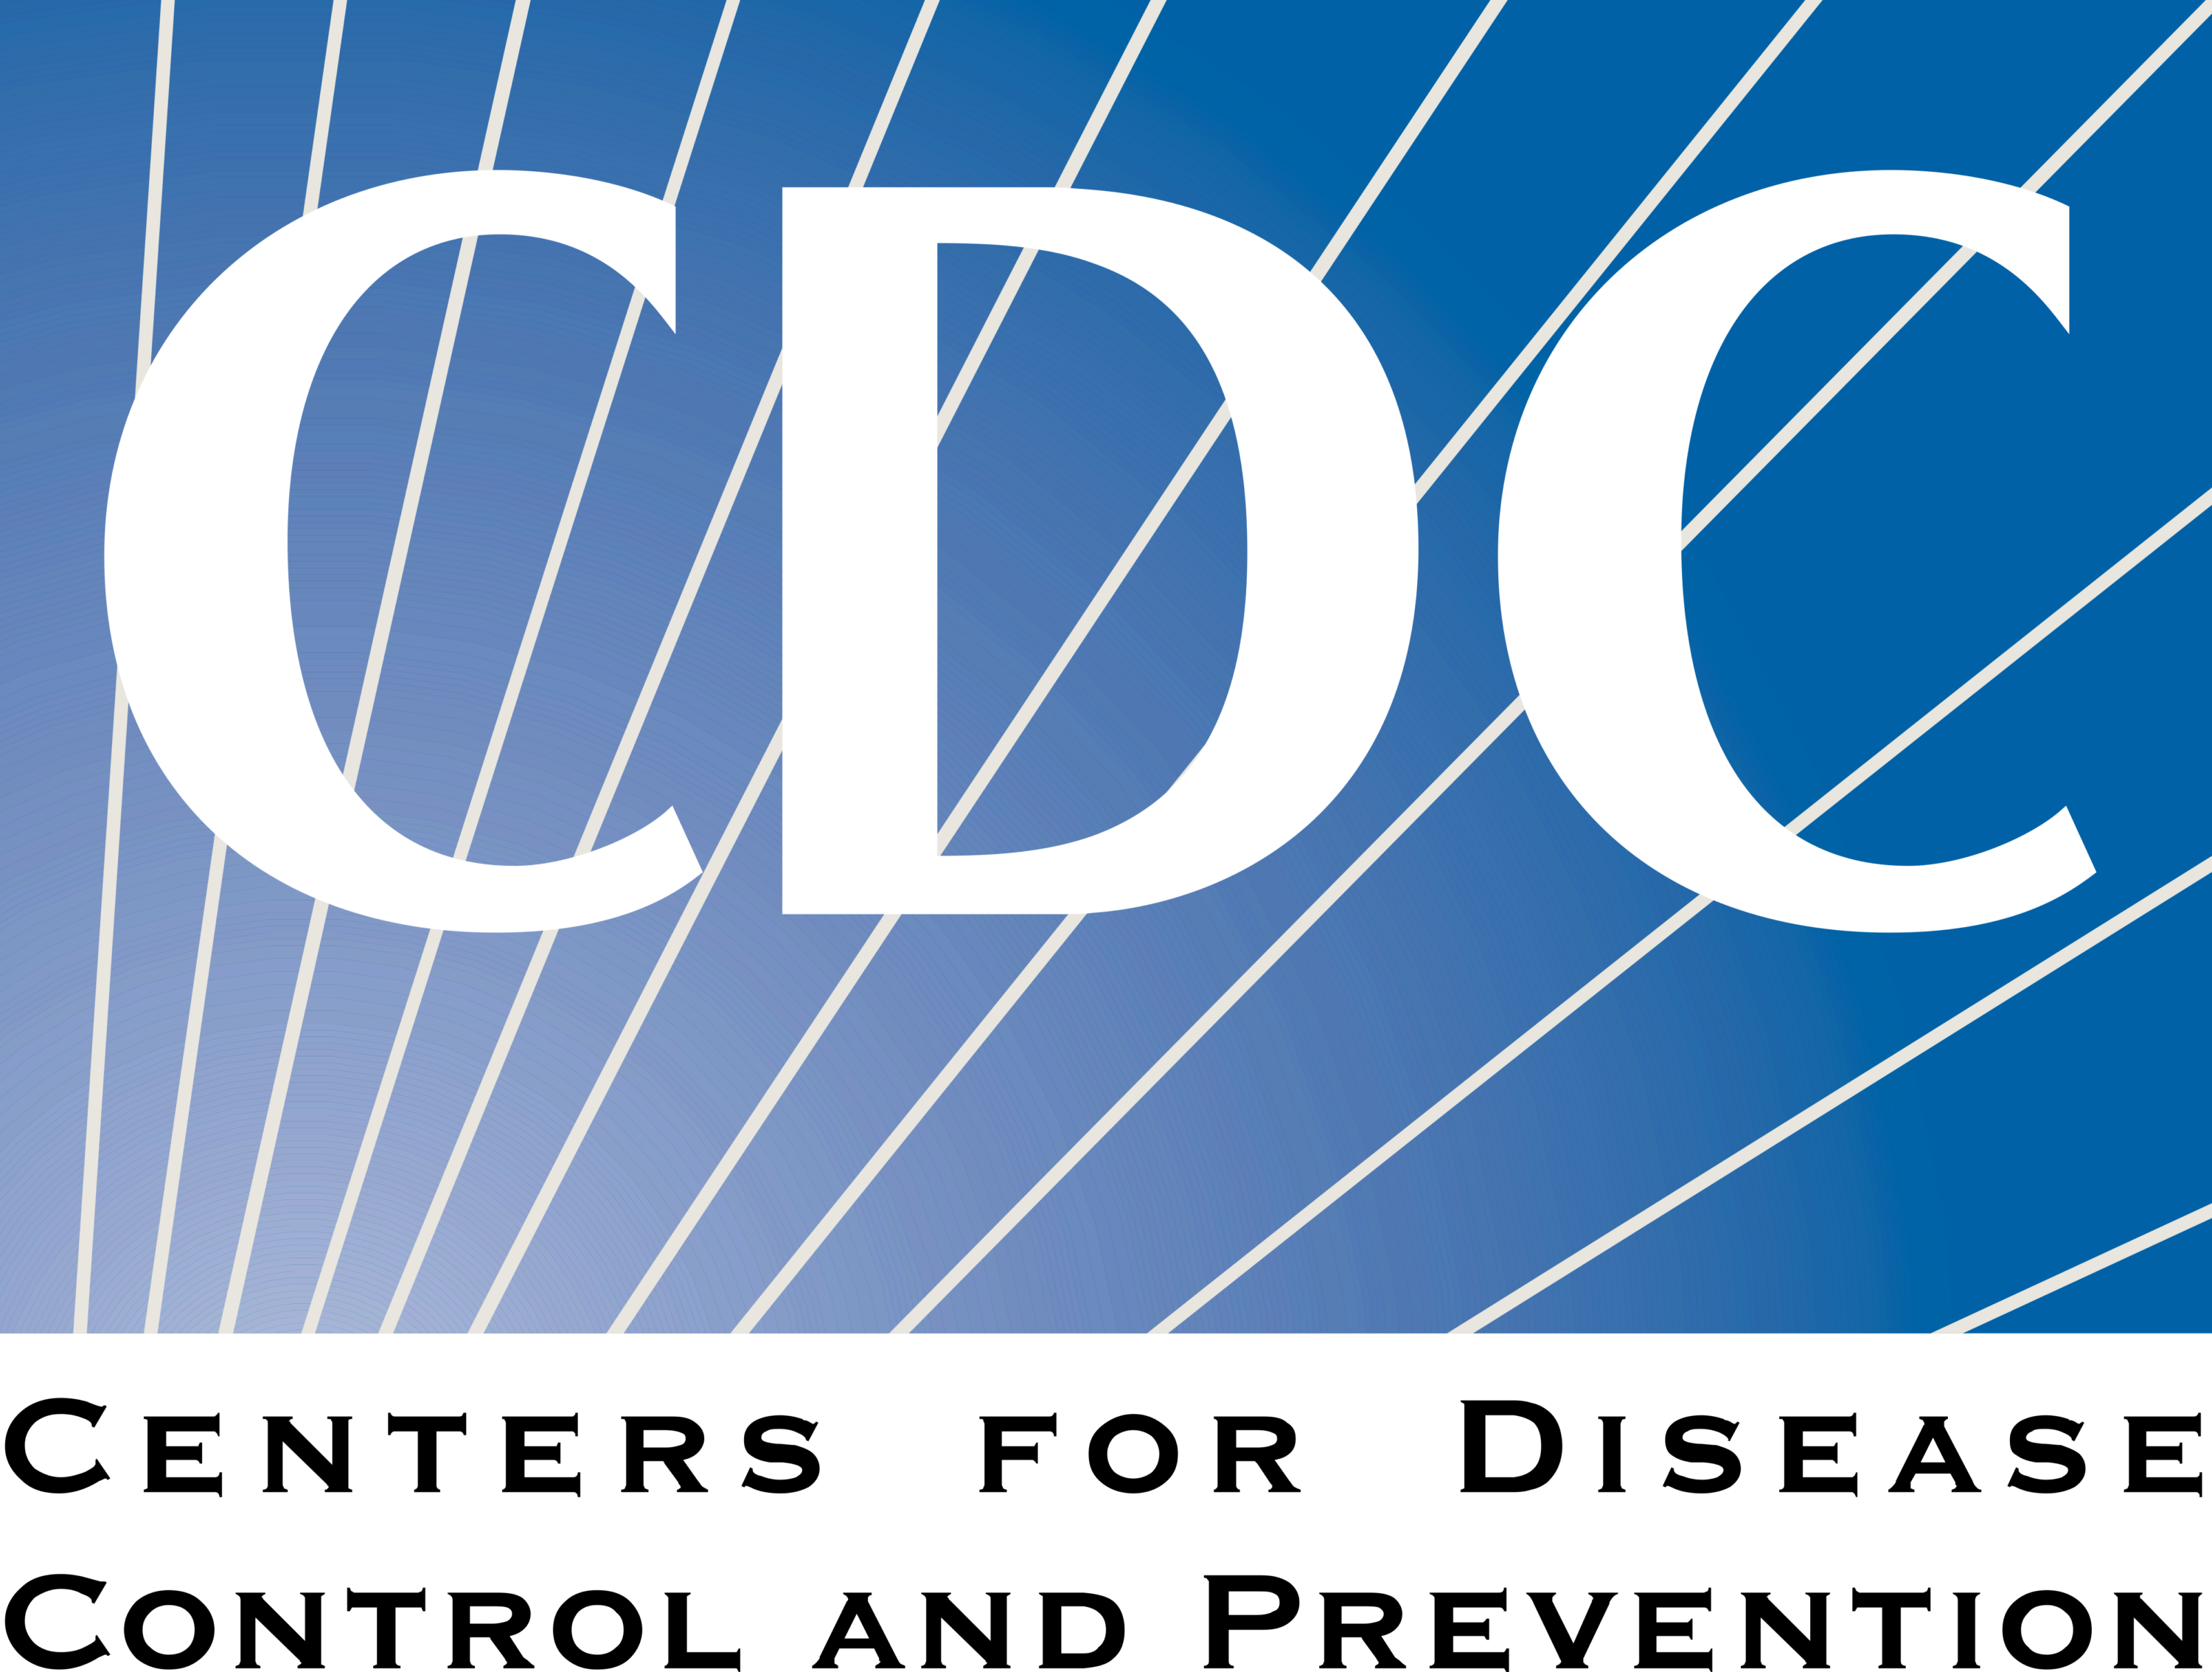 US CDC Logo